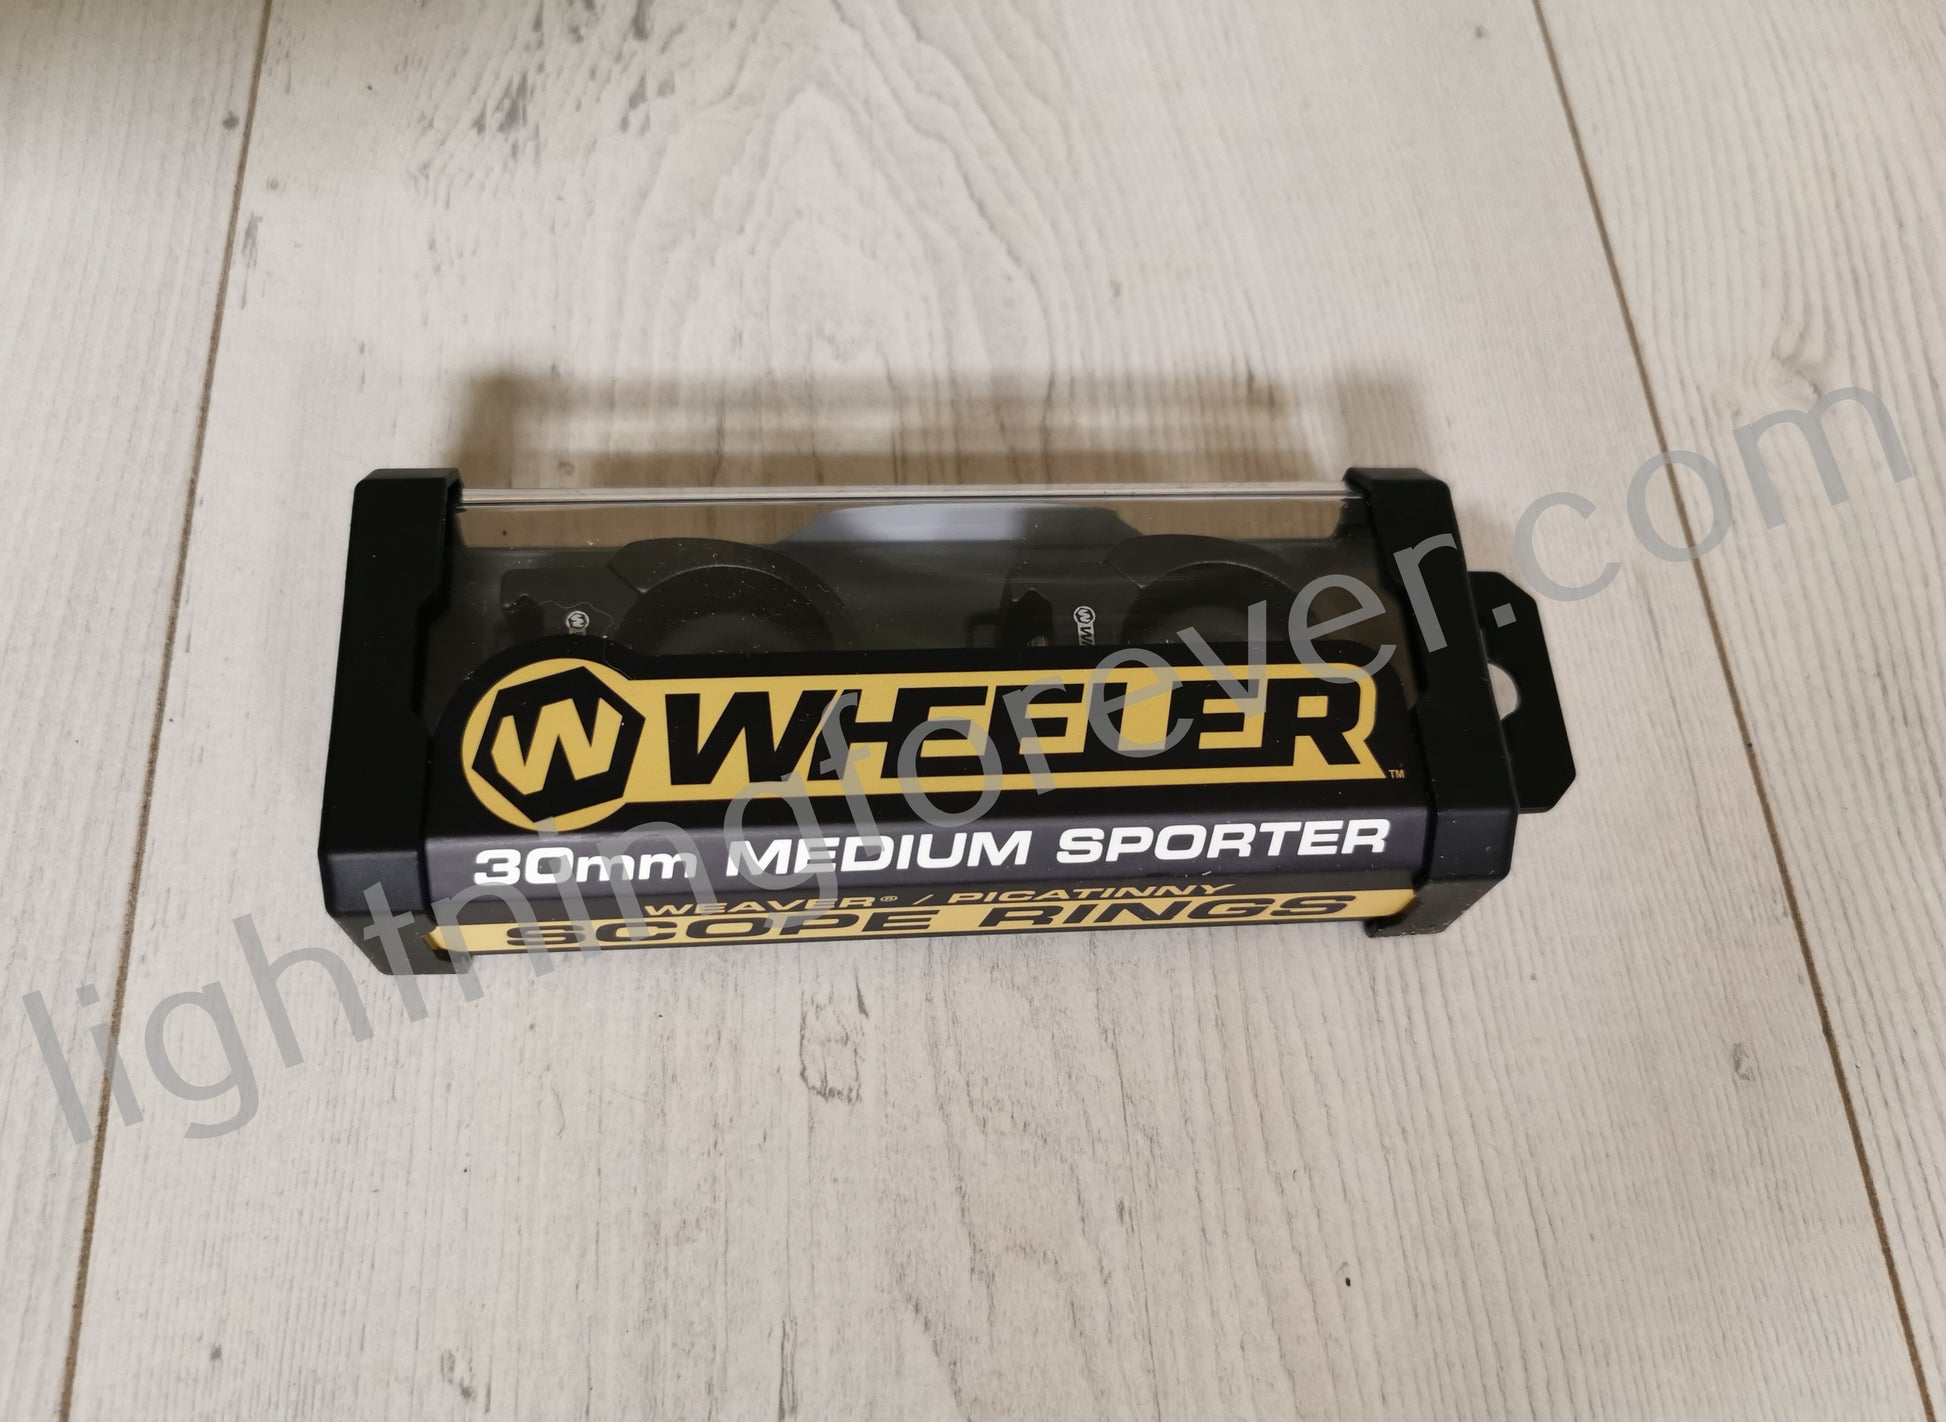 Colliers WHEELER Sporter Bi-Weaver 30 mm pour rail Weaver et Picatinny (21 mm) profil medium package